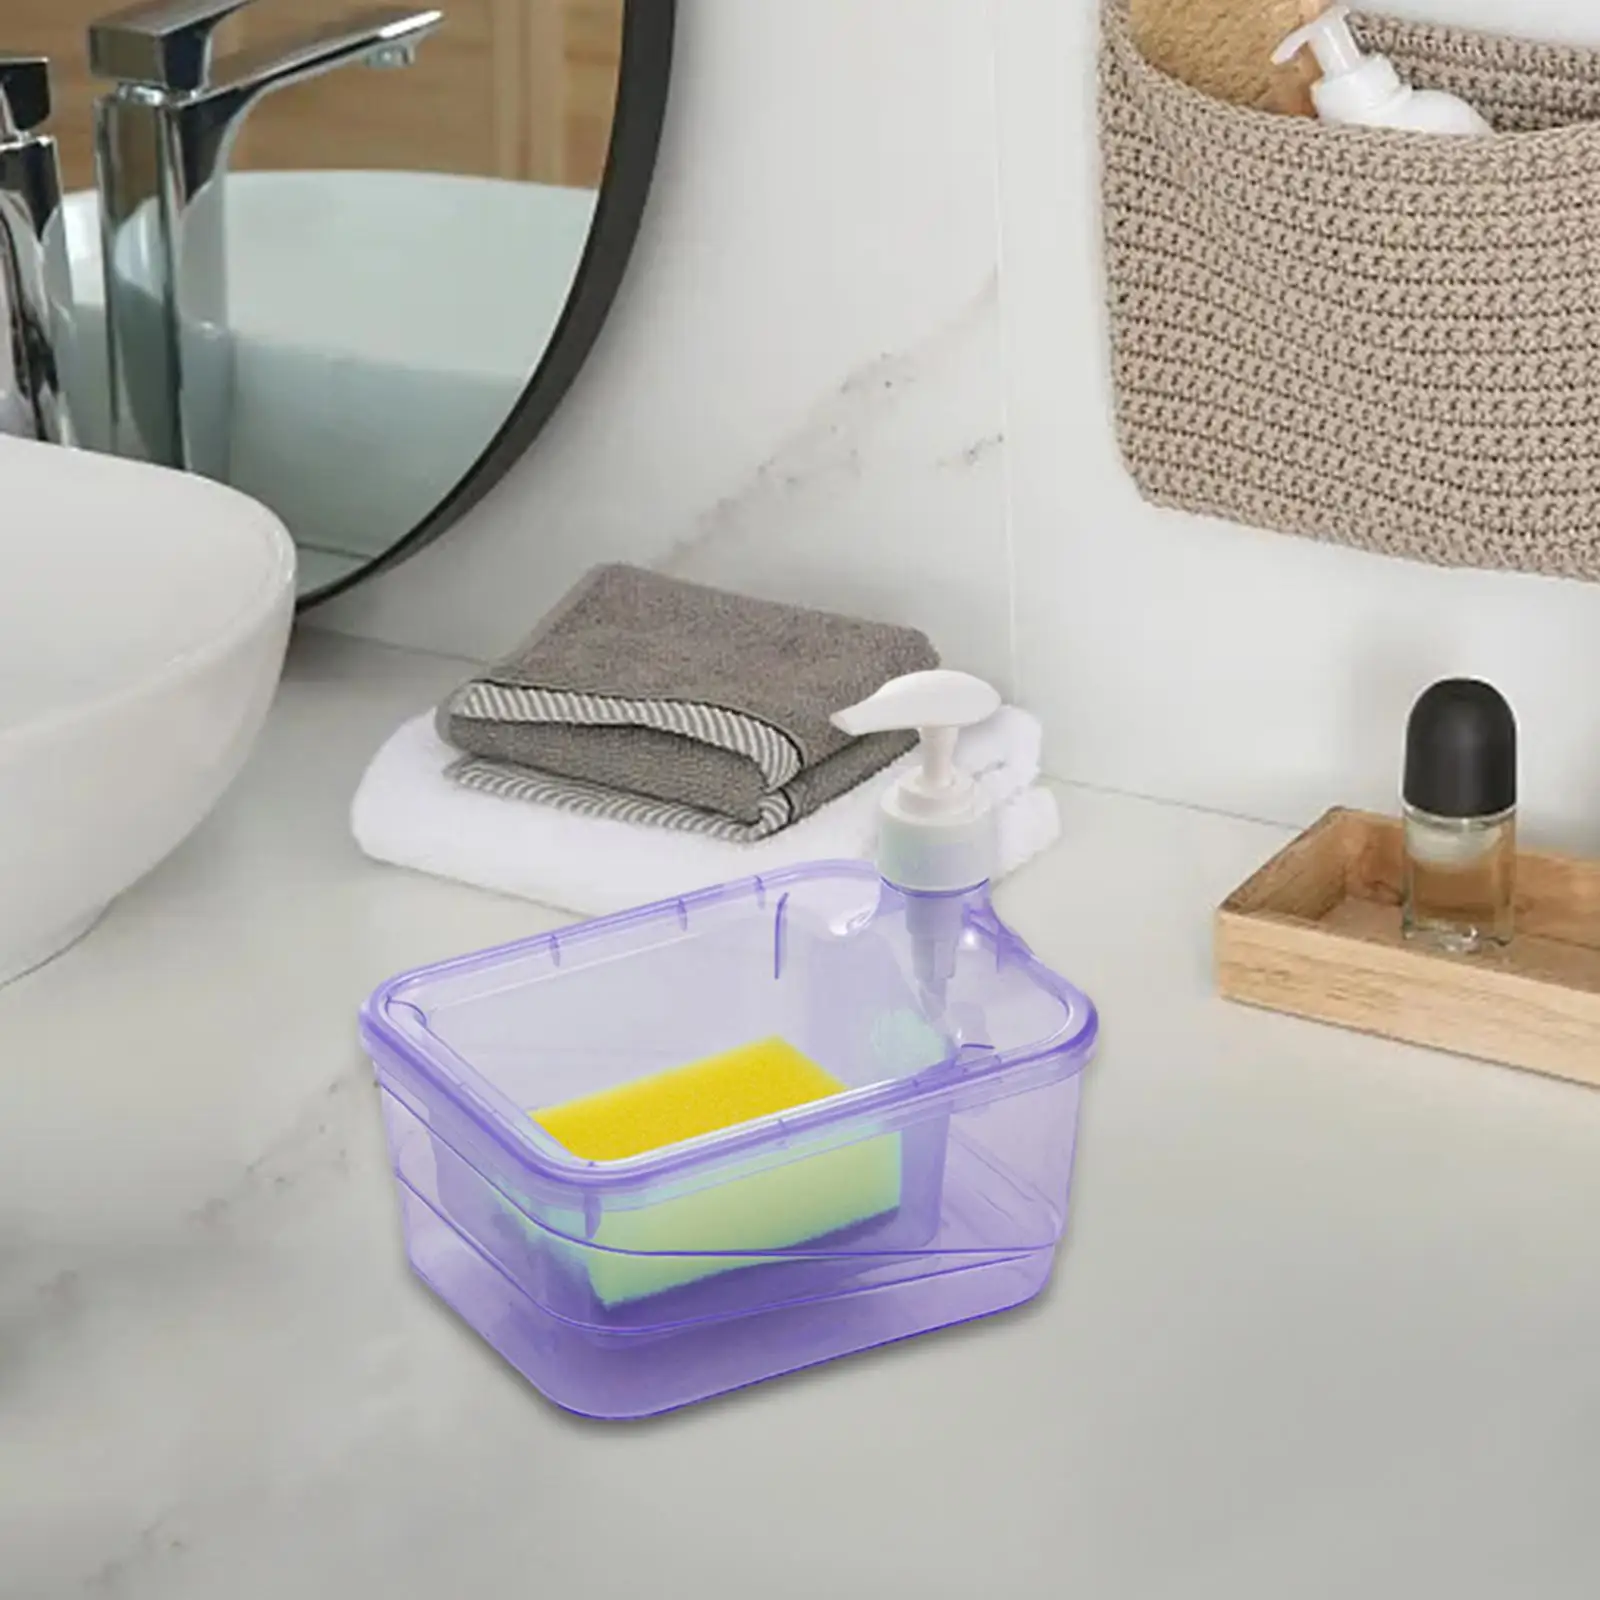 Dish Soap Dispenser and Sponge Holder Multifunctional Practical Compact Soap Liquid Pump Bottle for Bathroom Cafe Kitchen Hotel